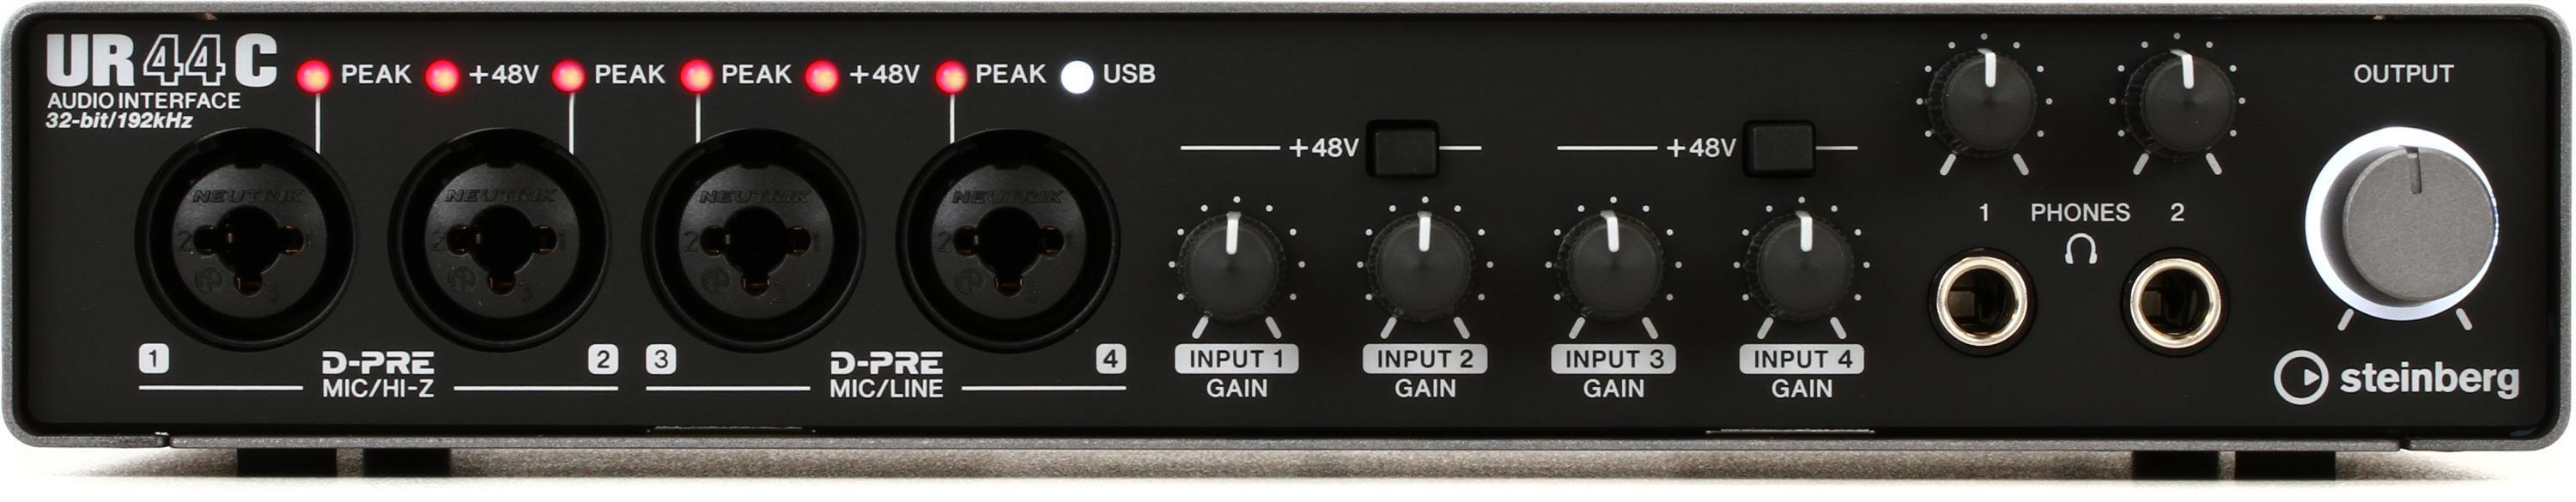 USB　Audio　Steinberg　Sweetwater　UR44C　Interface